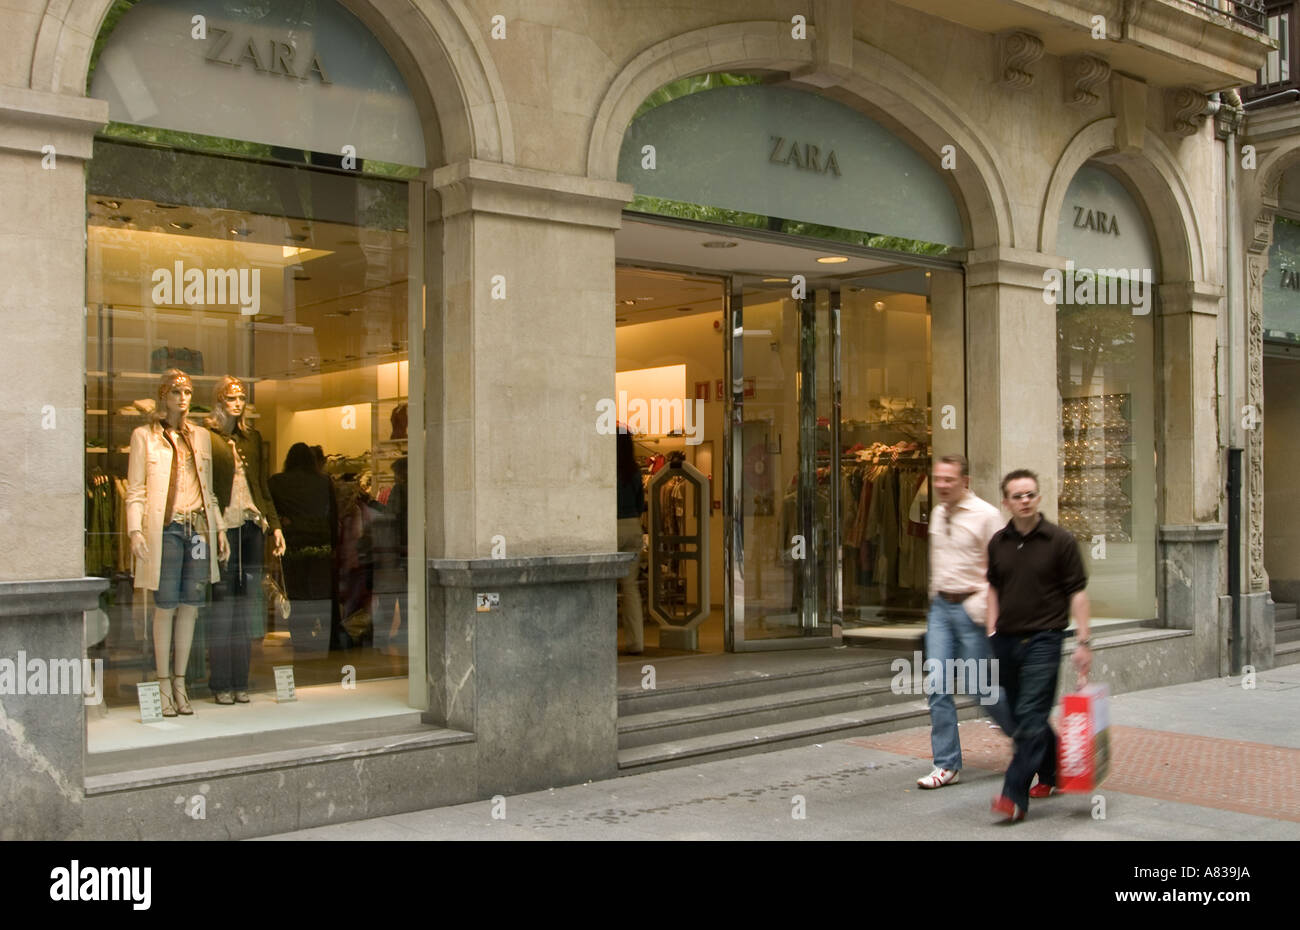 Spain, Bizkaia, Bilbao, View of a Zara store in a busy shopping street  Stock Photo - Alamy